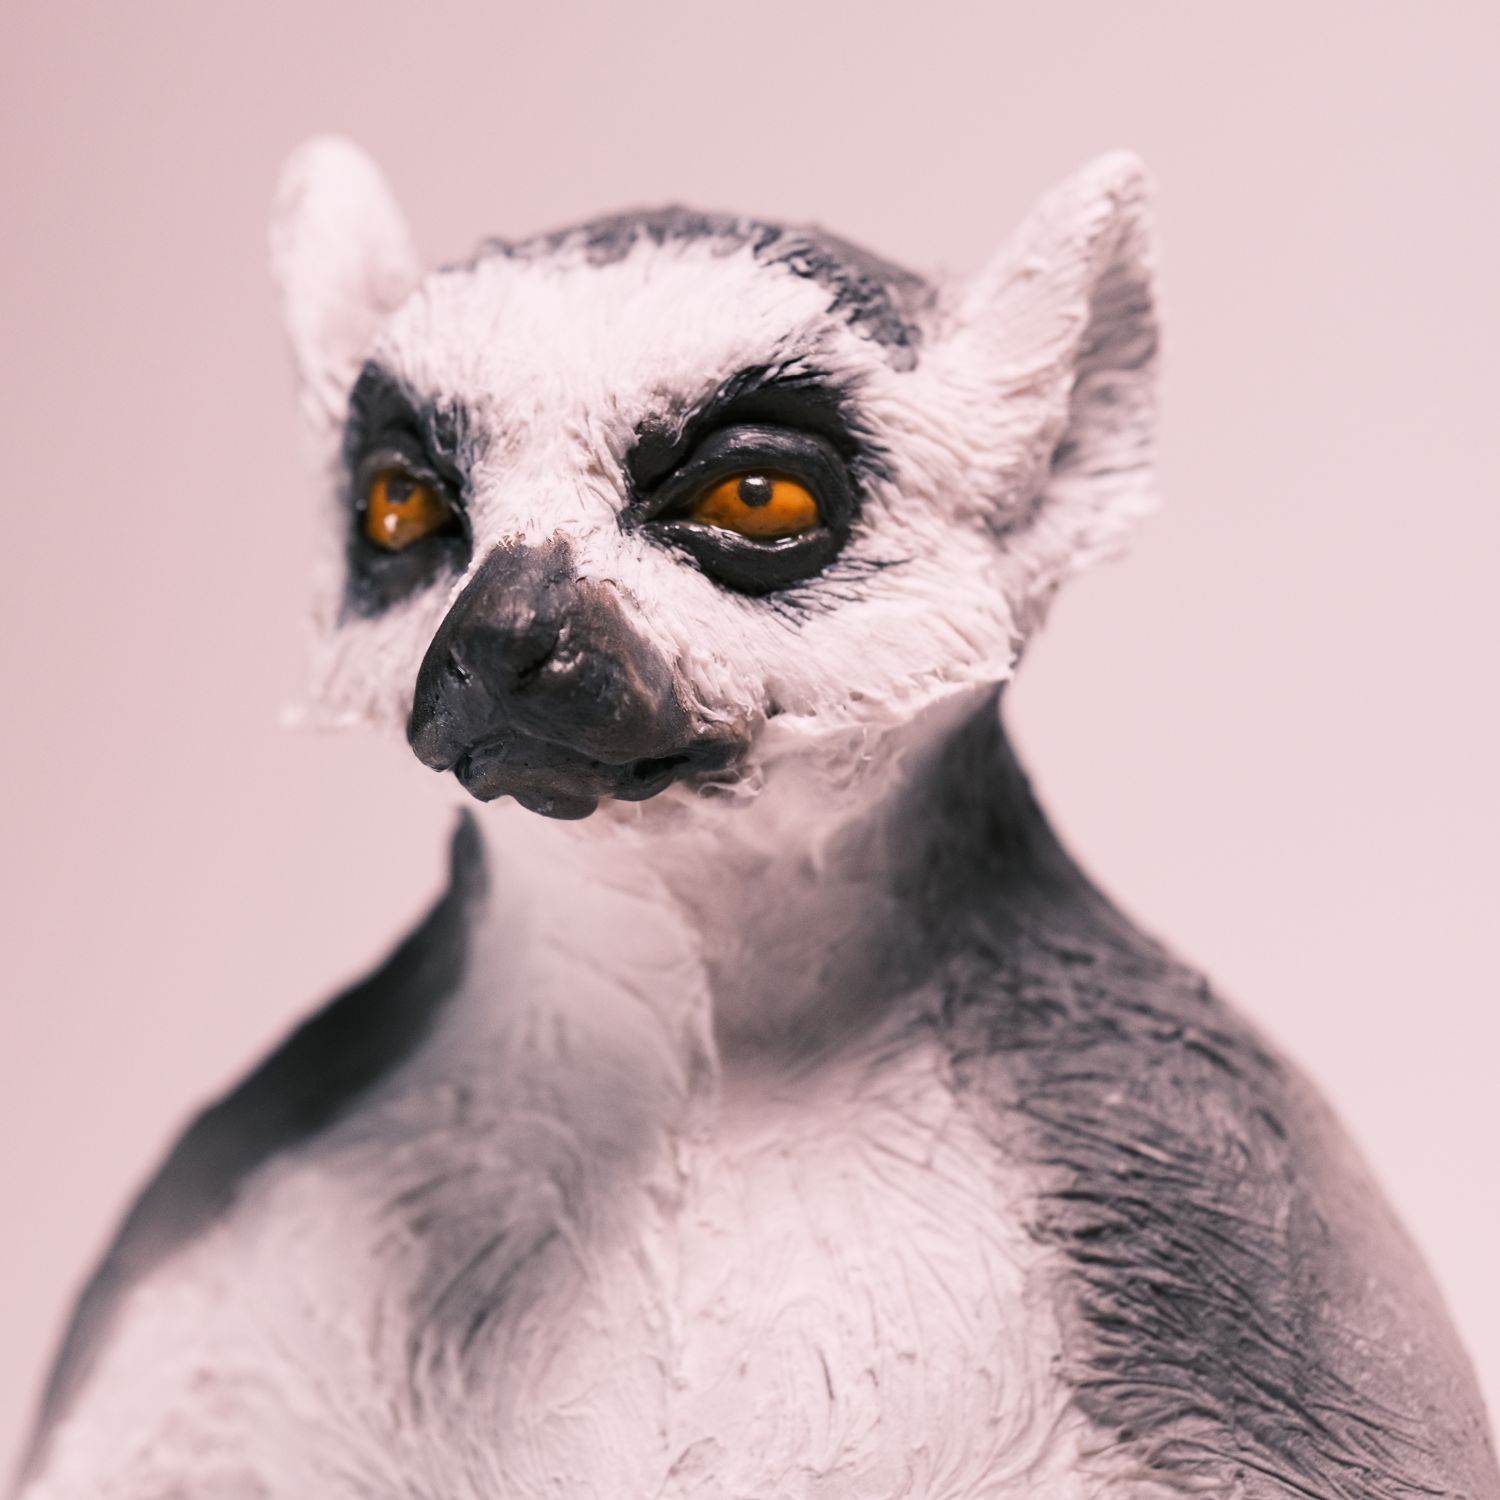 Peidi Wang: Lemur with a grip Product Image 3 of 3